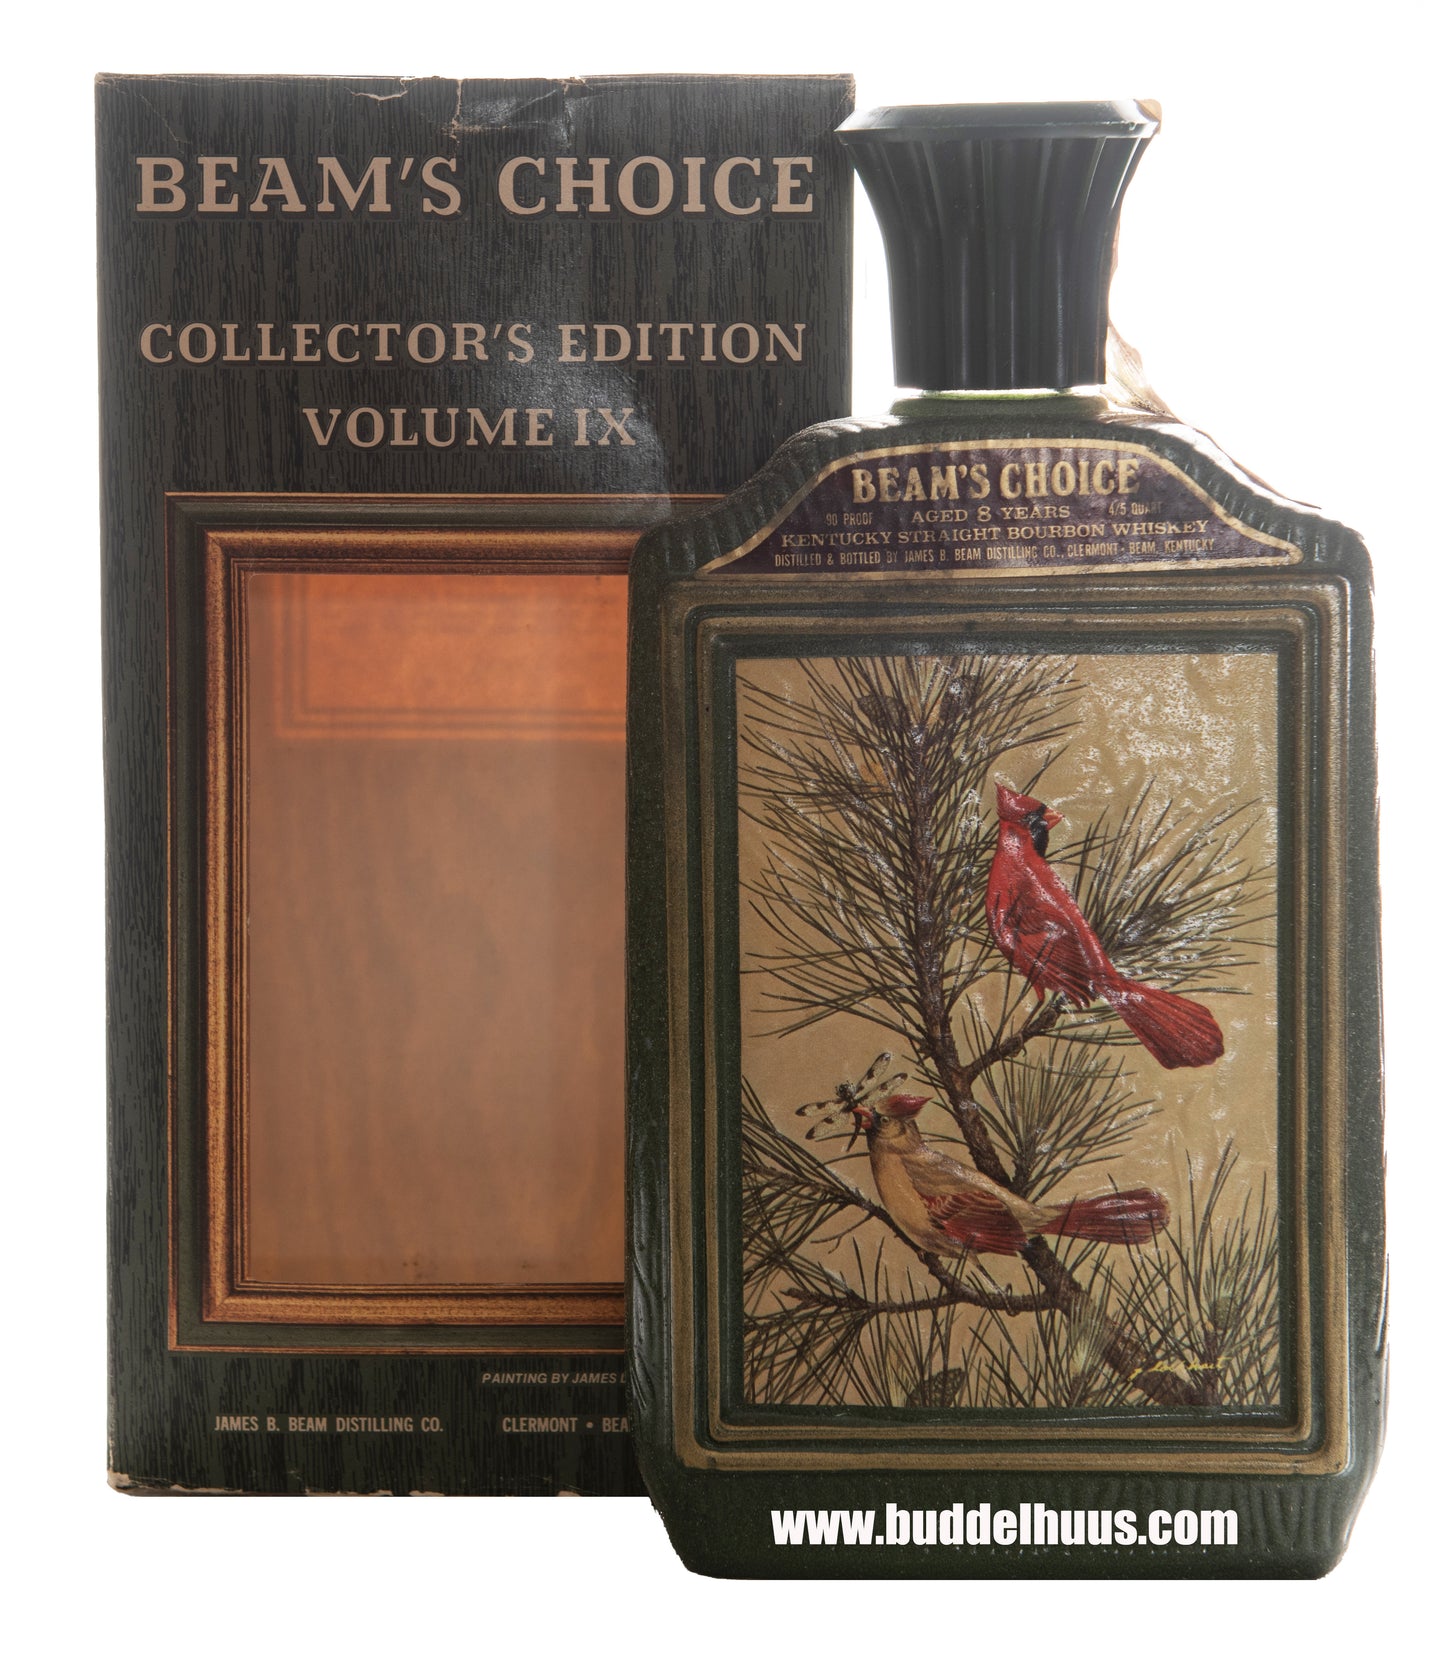 Beam's Choice 8 yo Collector's Edition Volume IX